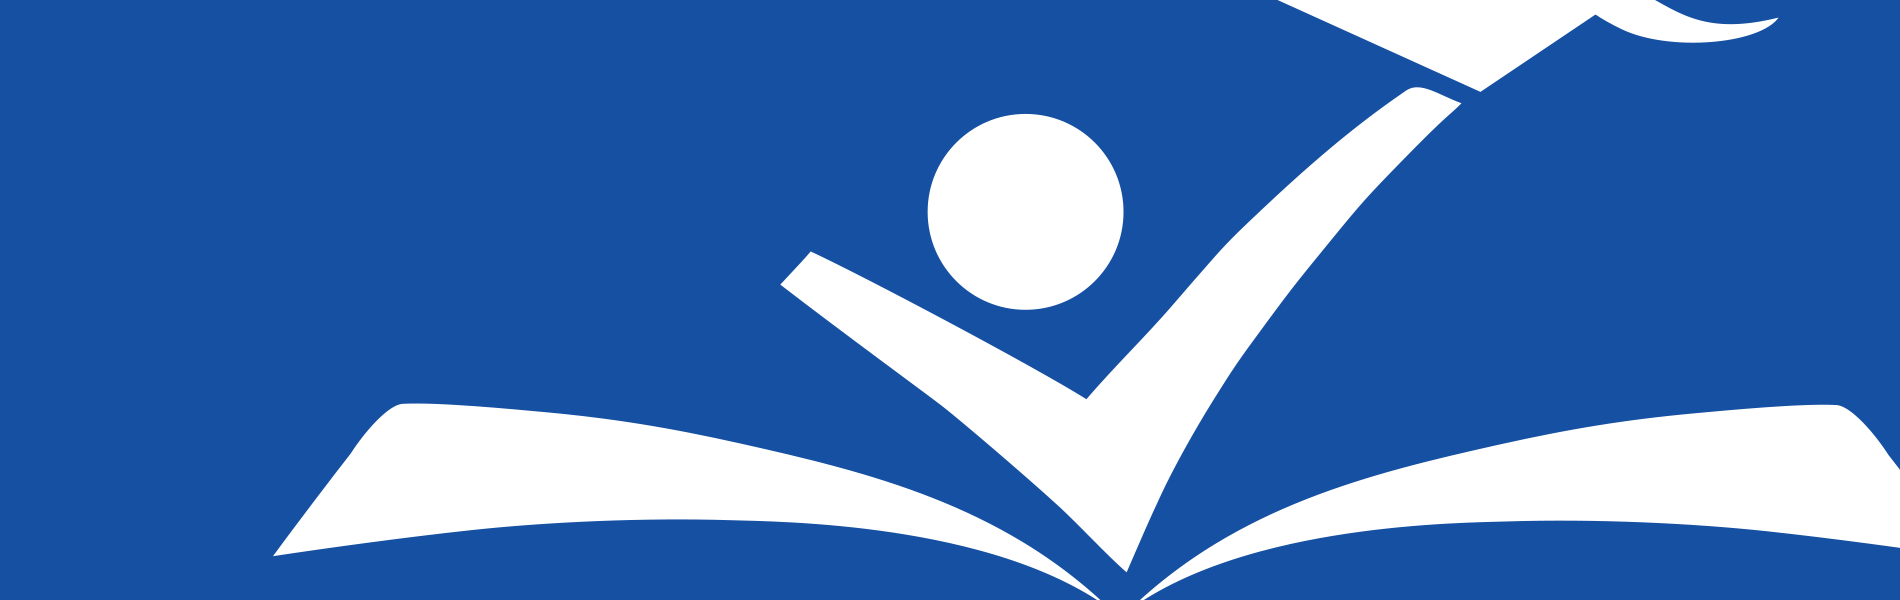 PGCPS Logo Blue (landscape)